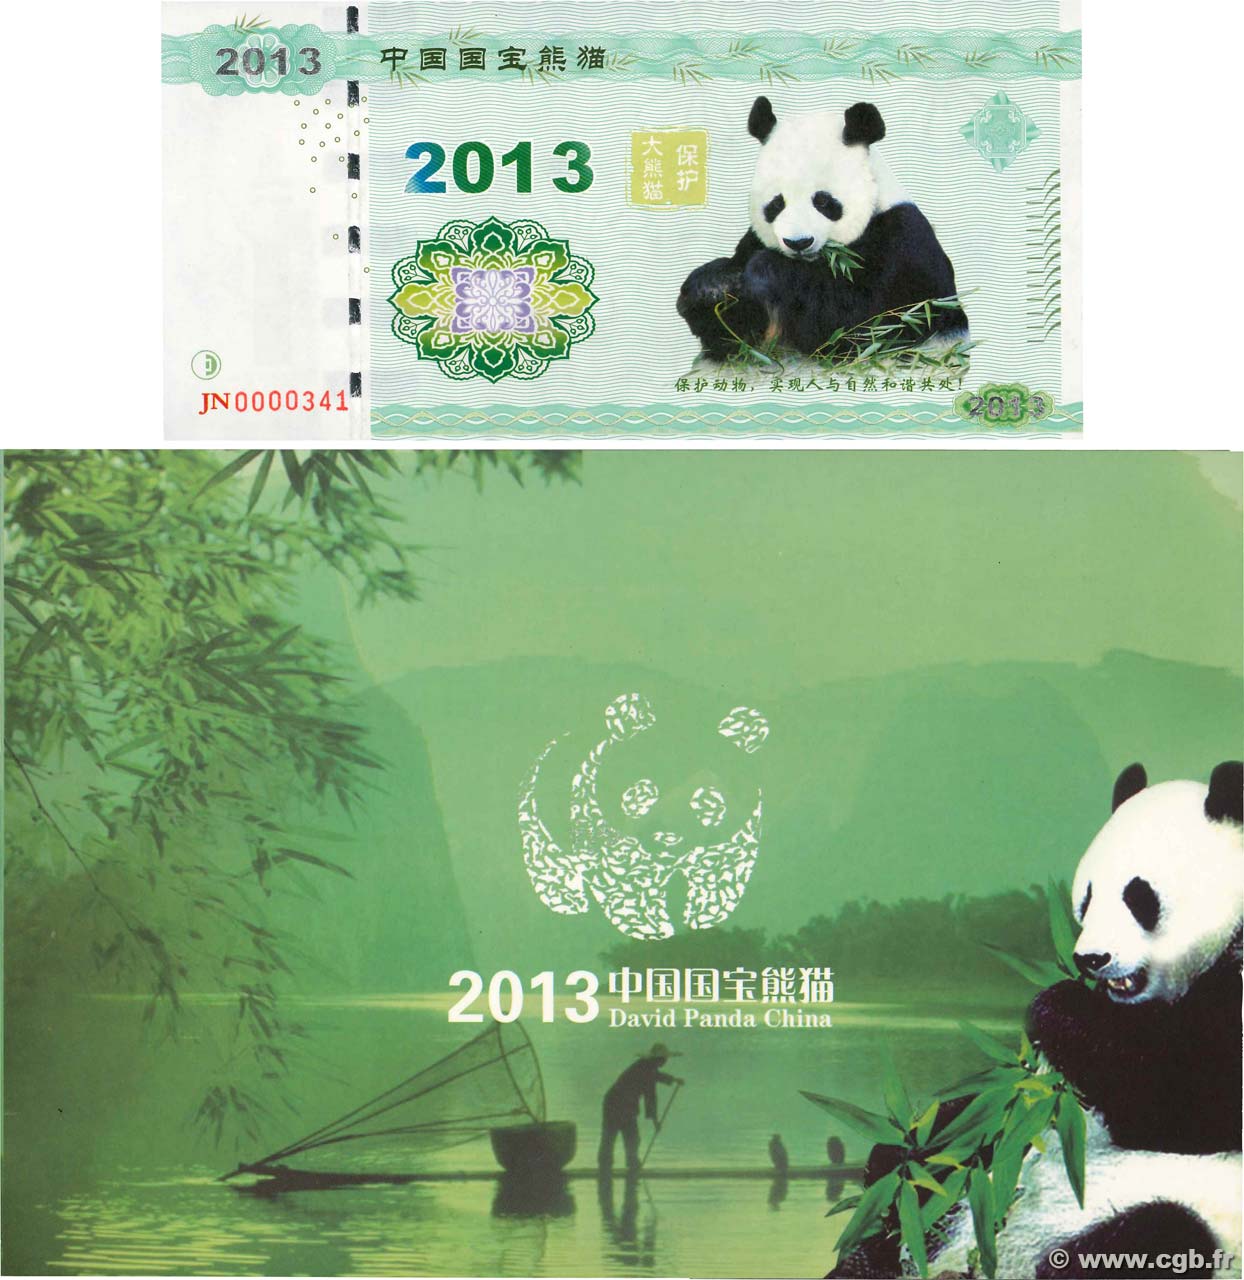 1 Yuan PANDA Set de présentation REPUBBLICA POPOLARE CINESE  2013  FDC